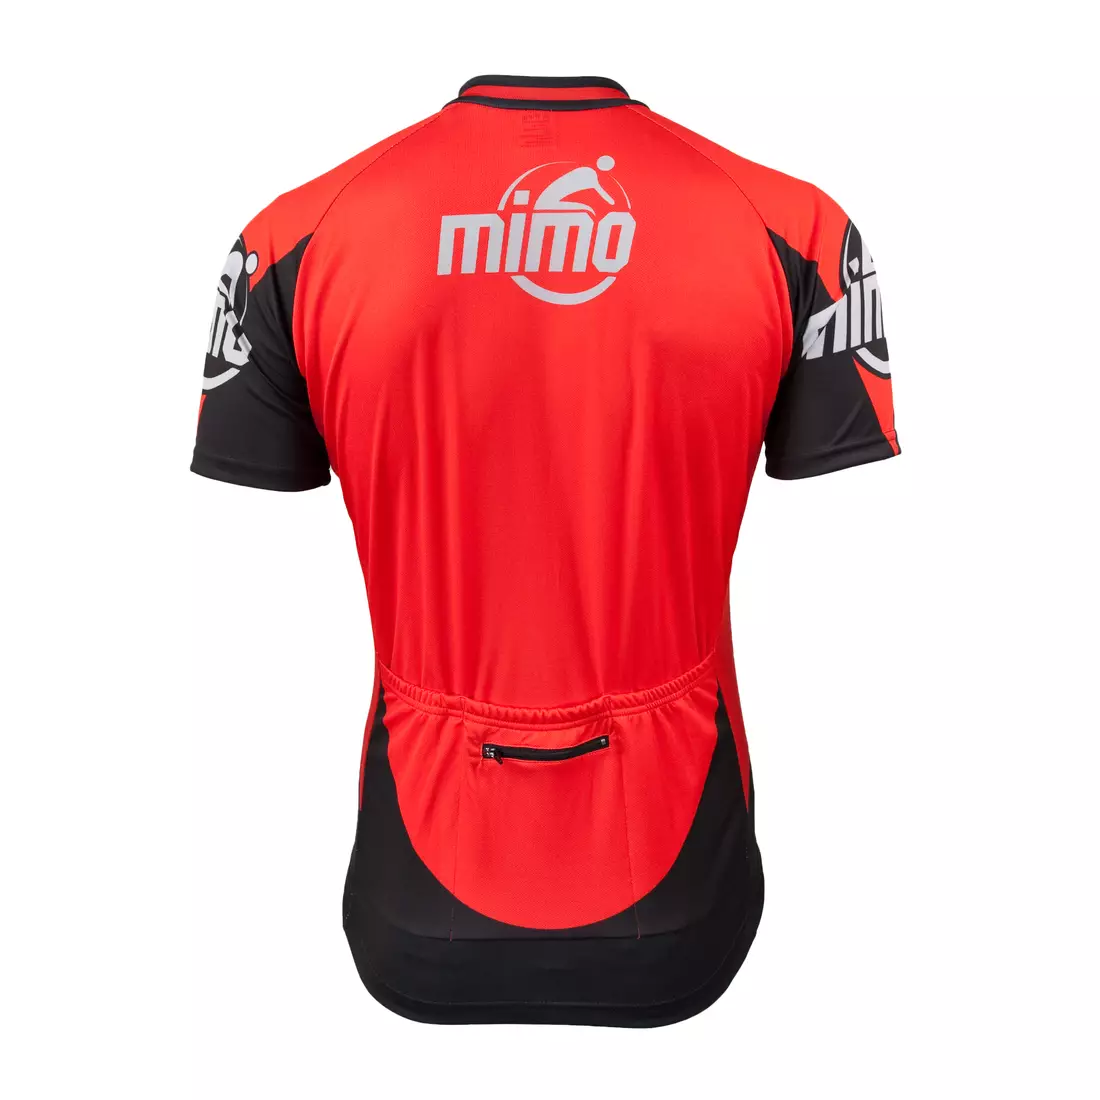 MikeSPORT DESIGN BROTHERHOOD cycling jersey